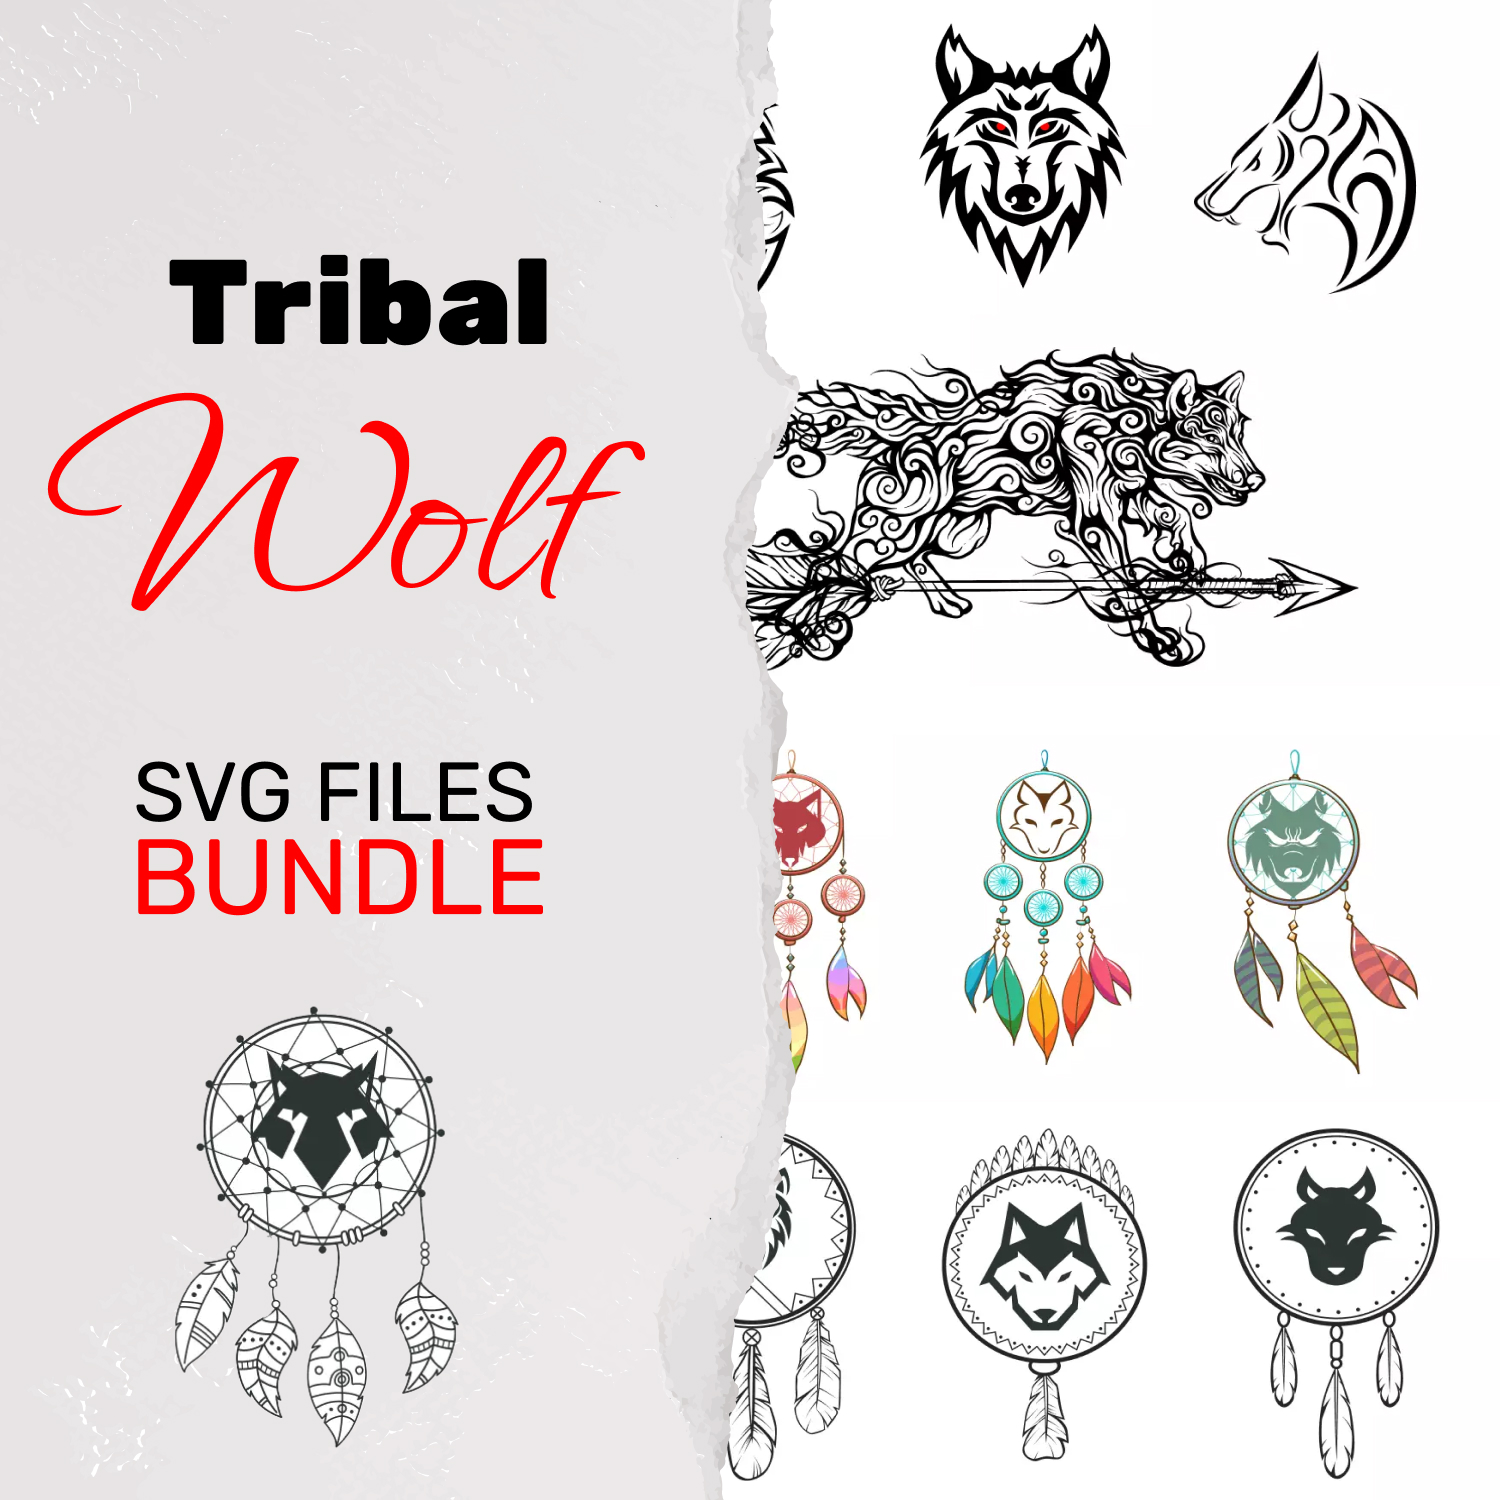 Tribal wolf svg files bundle.